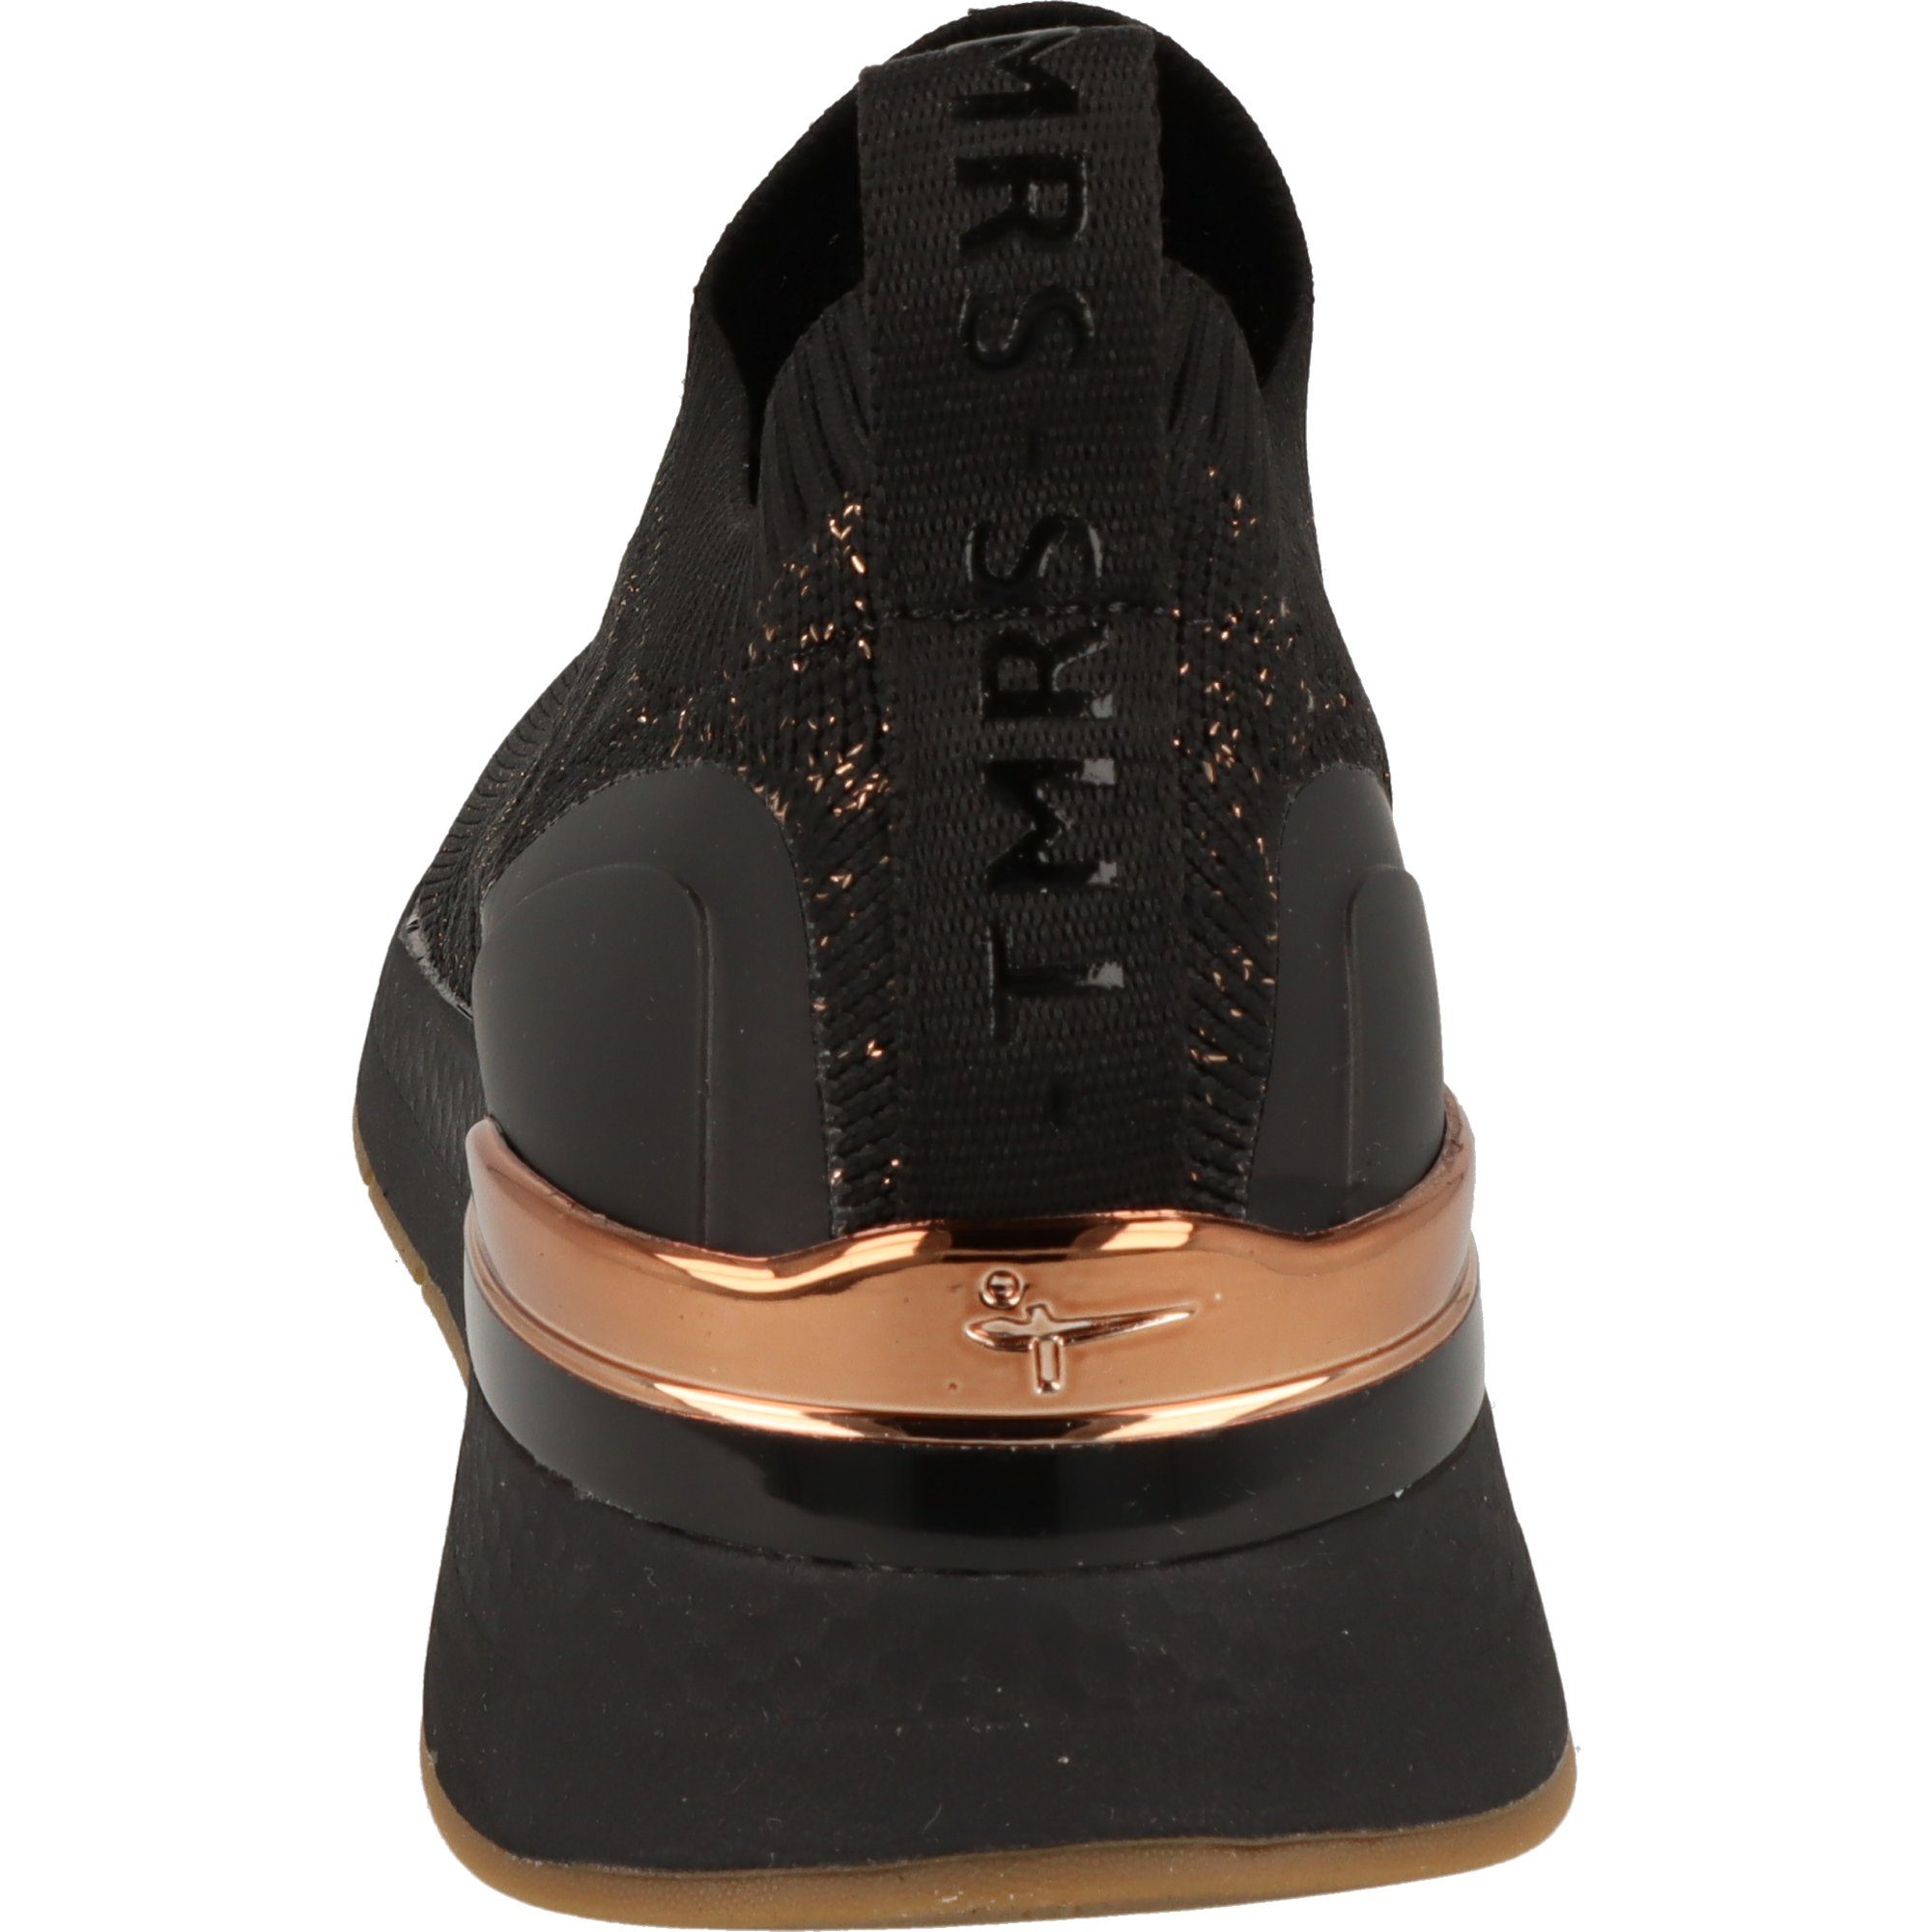 Slip-On Damen Tamaris Glitzer 1-24704-41 Komfort Black/Copper Halbschuhe Schuhe Sneaker